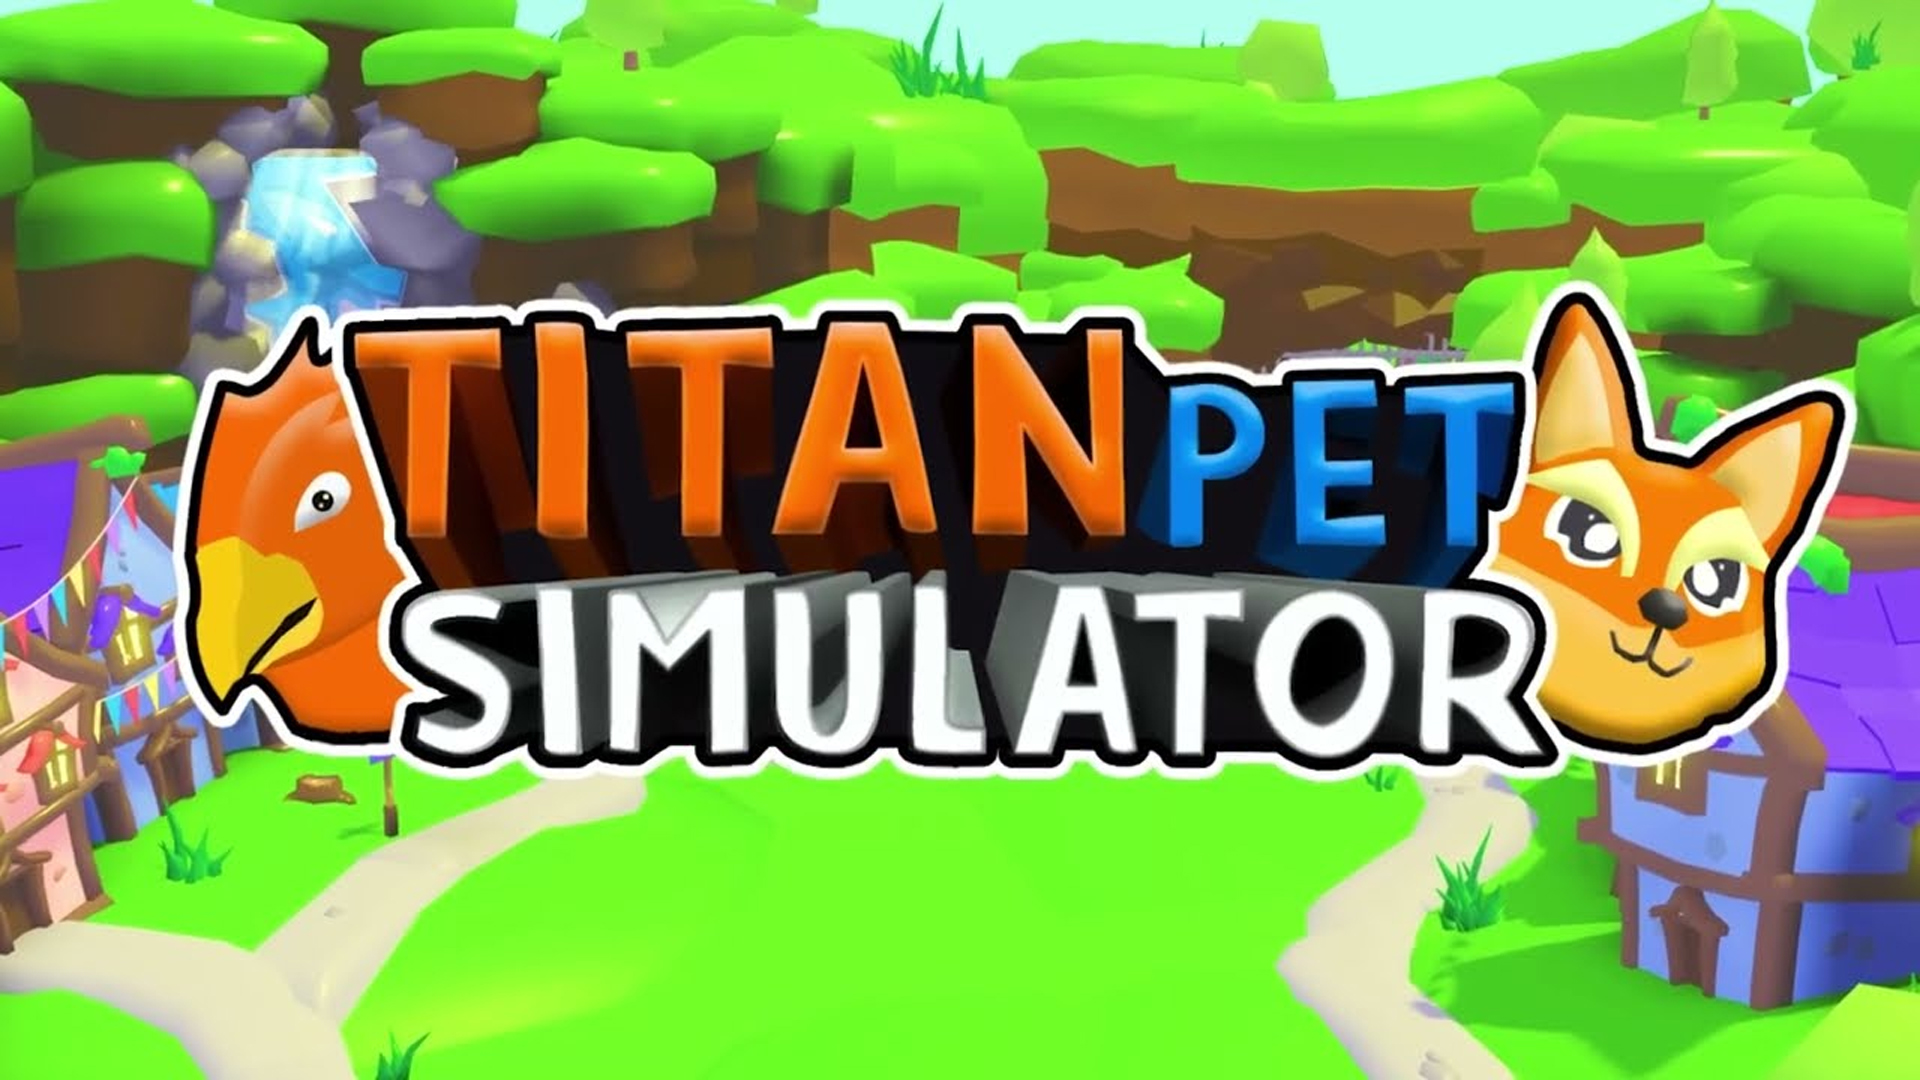 Pet Clicking Simulator codes